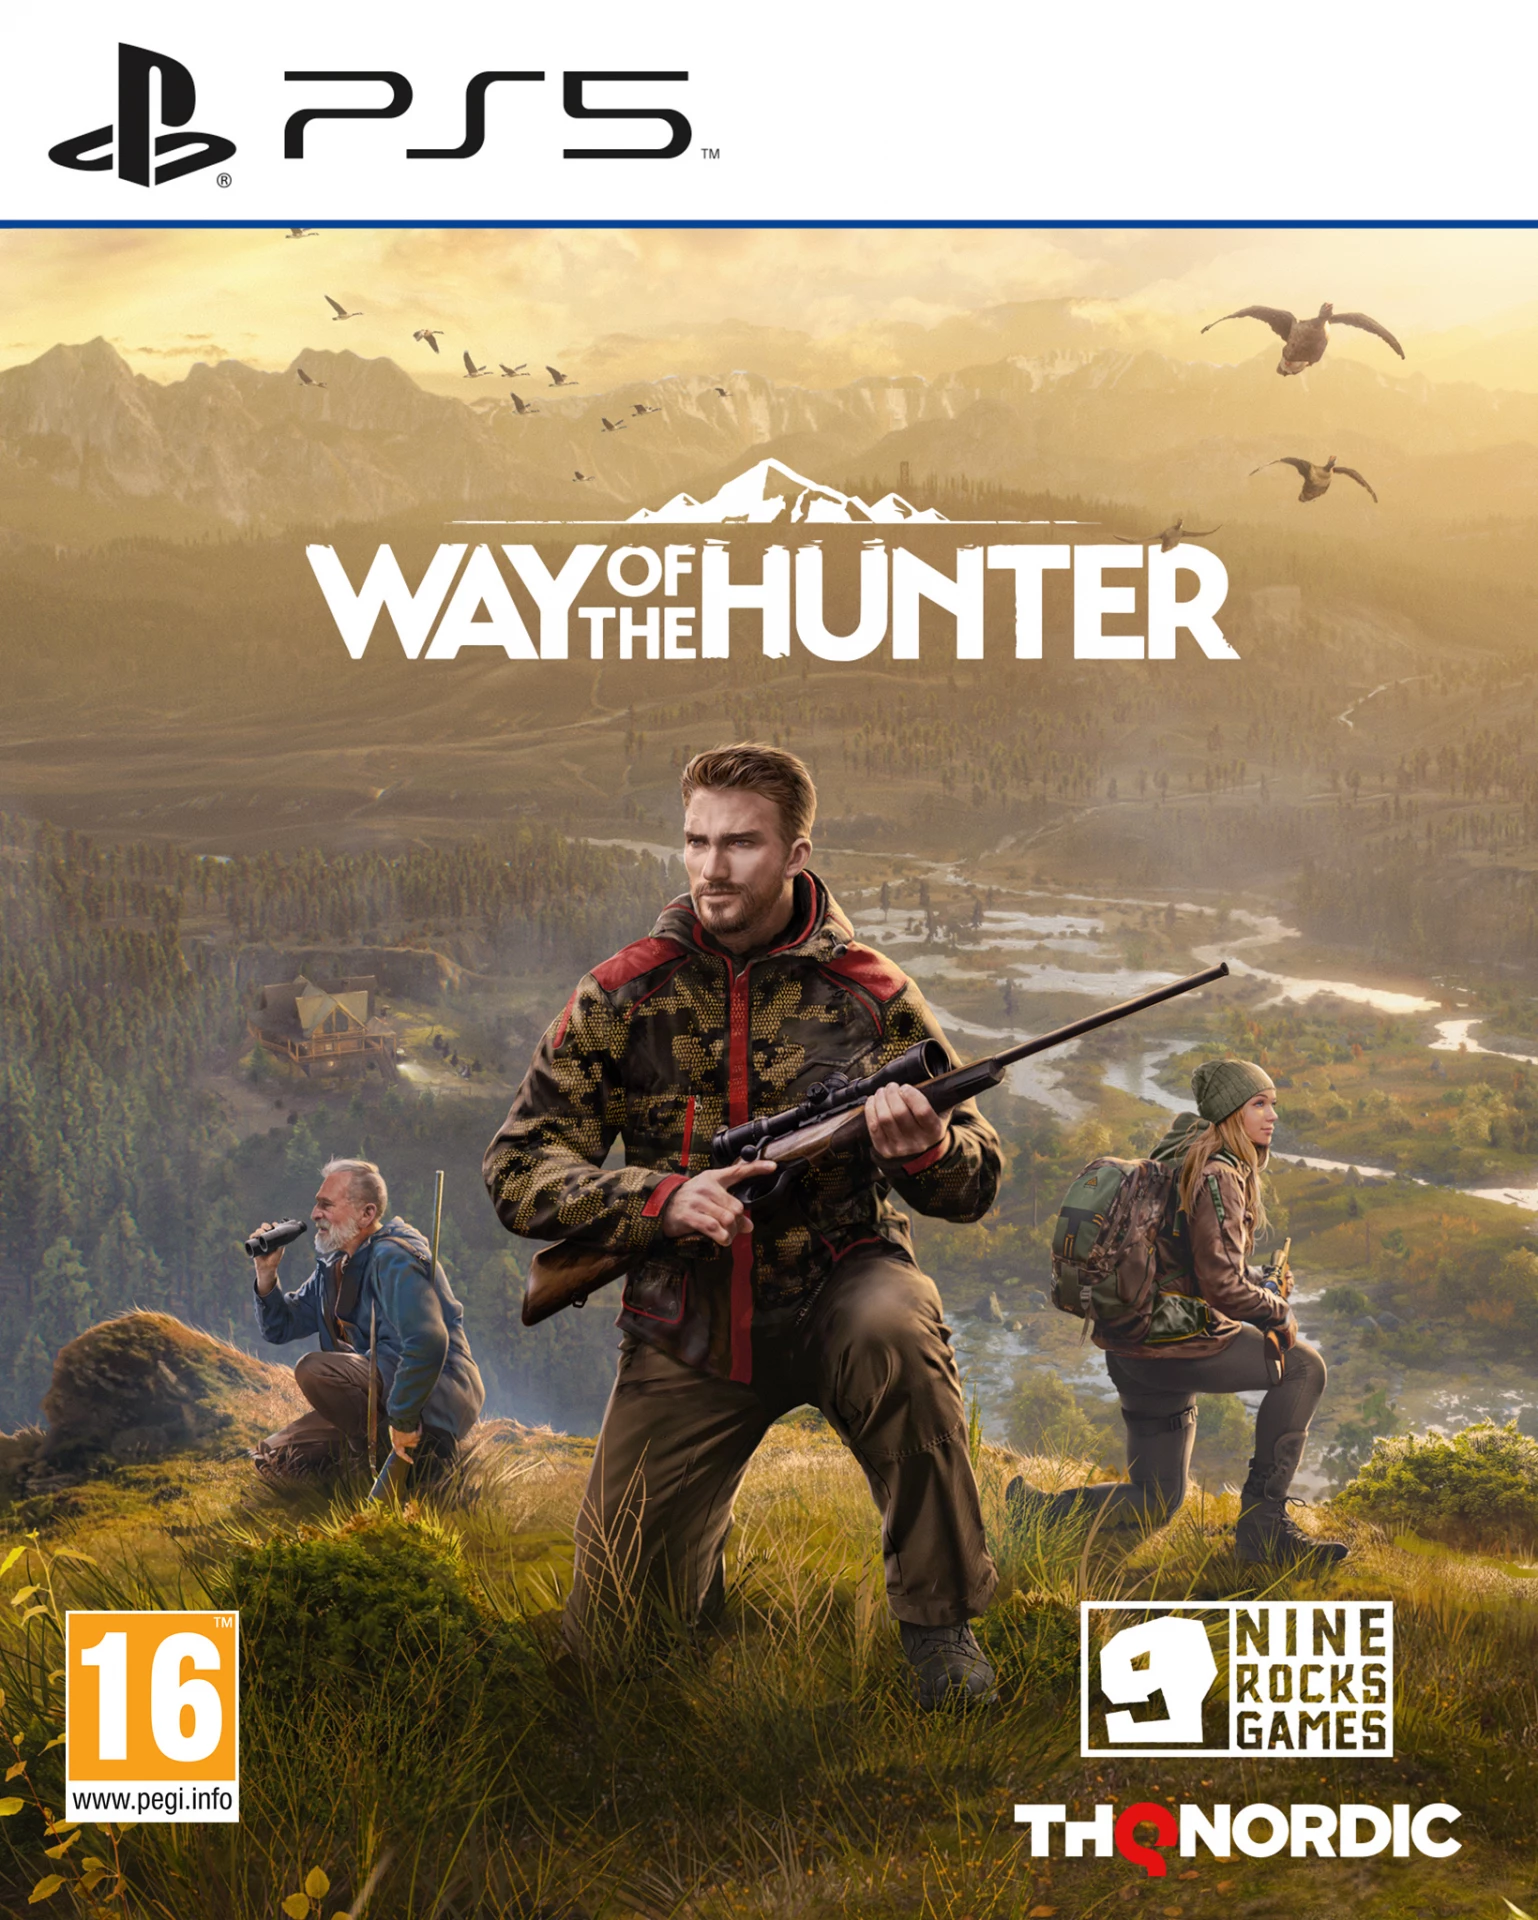 Way of the Hunter (PS5), Nine Rocks Games